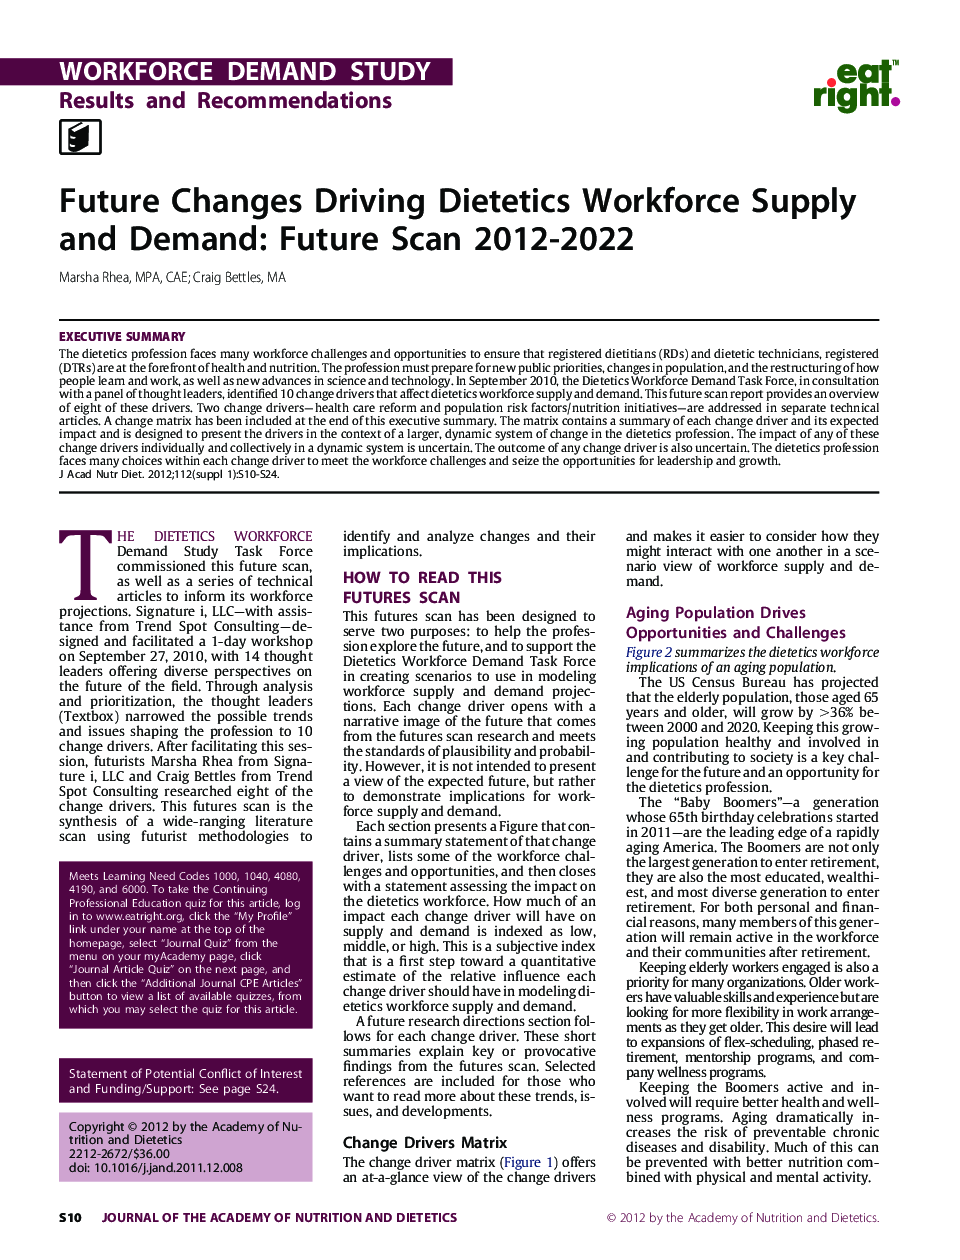 Future Changes Driving Dietetics Workforce Supply and Demand: Future Scan 2012-2022 